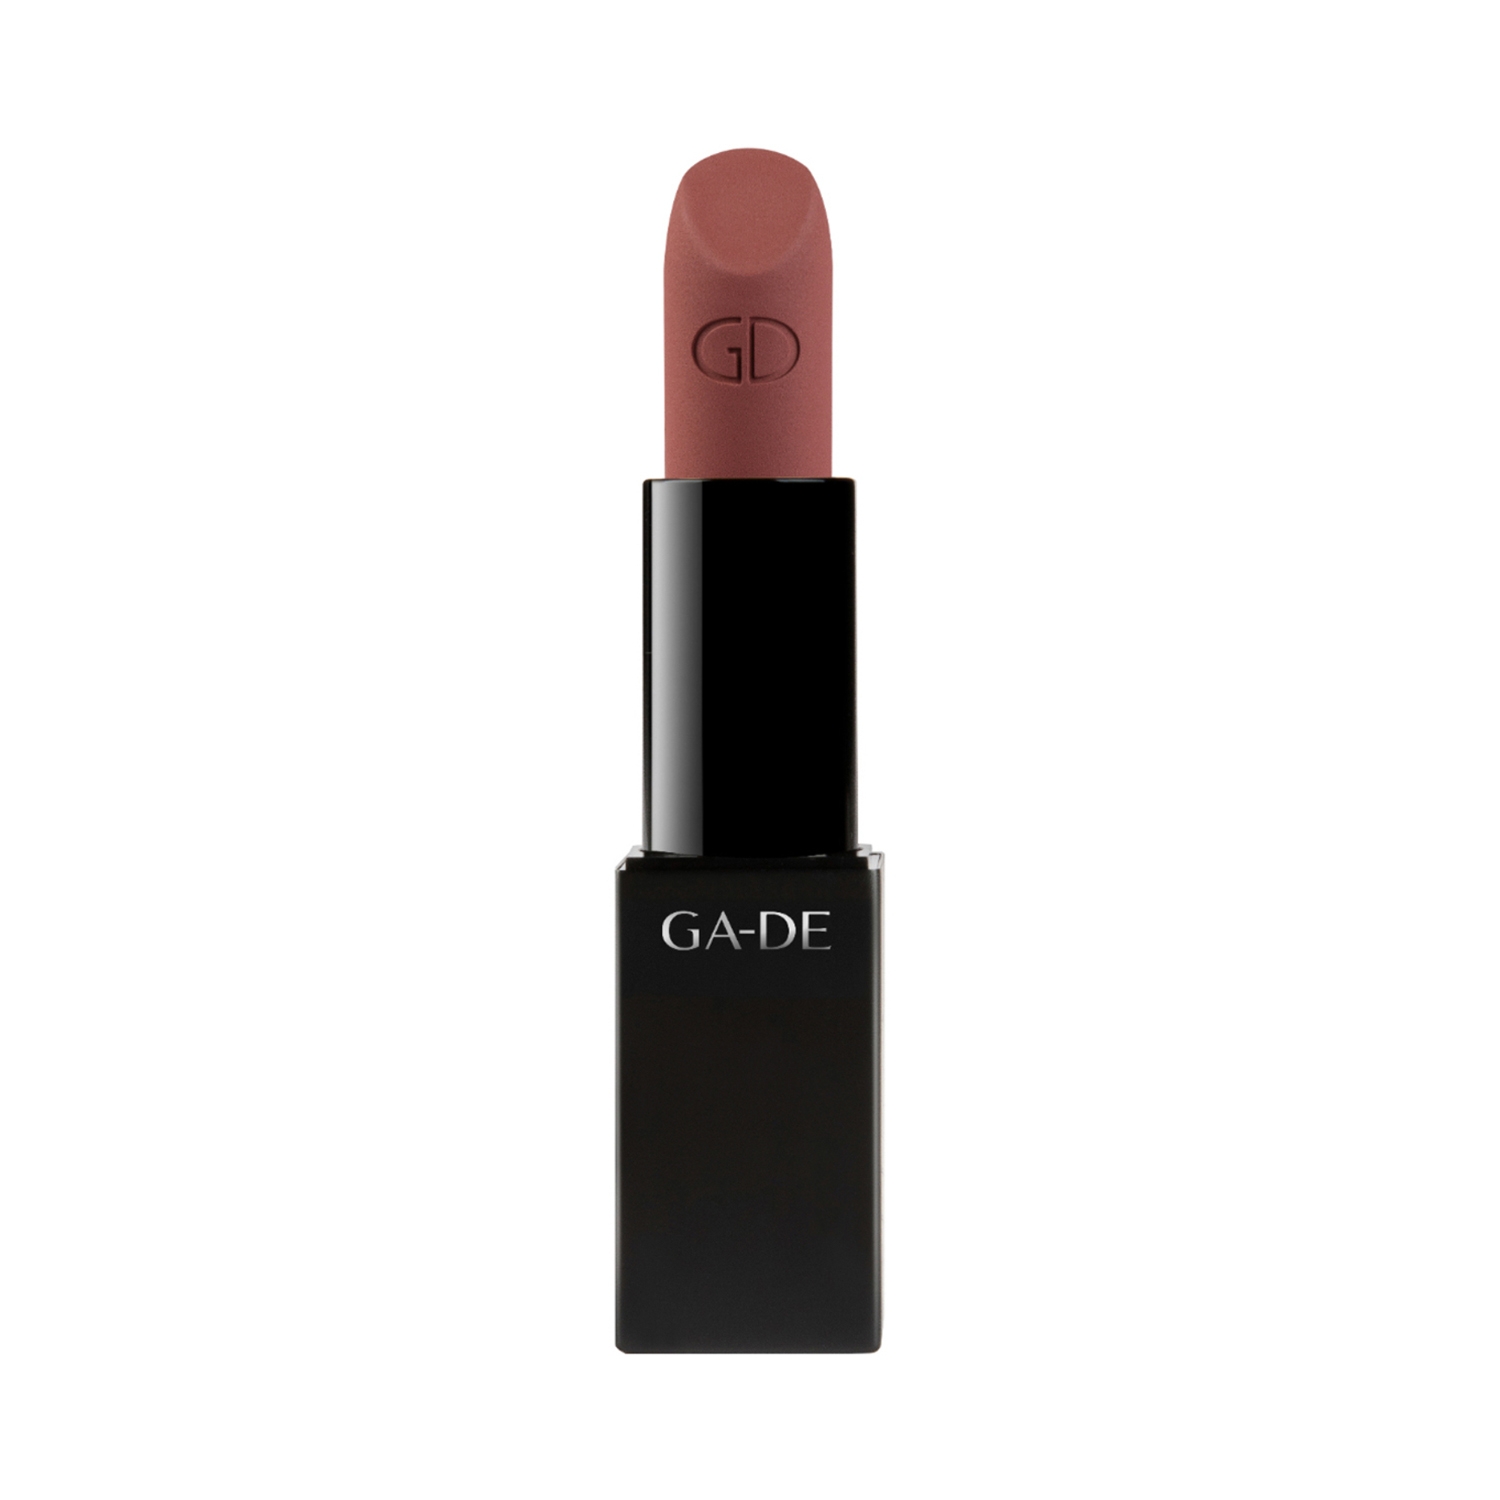 GA-DE | GA-DE Velveteen Pure Matte Lipstick - 754 Mauve Mist (4g)